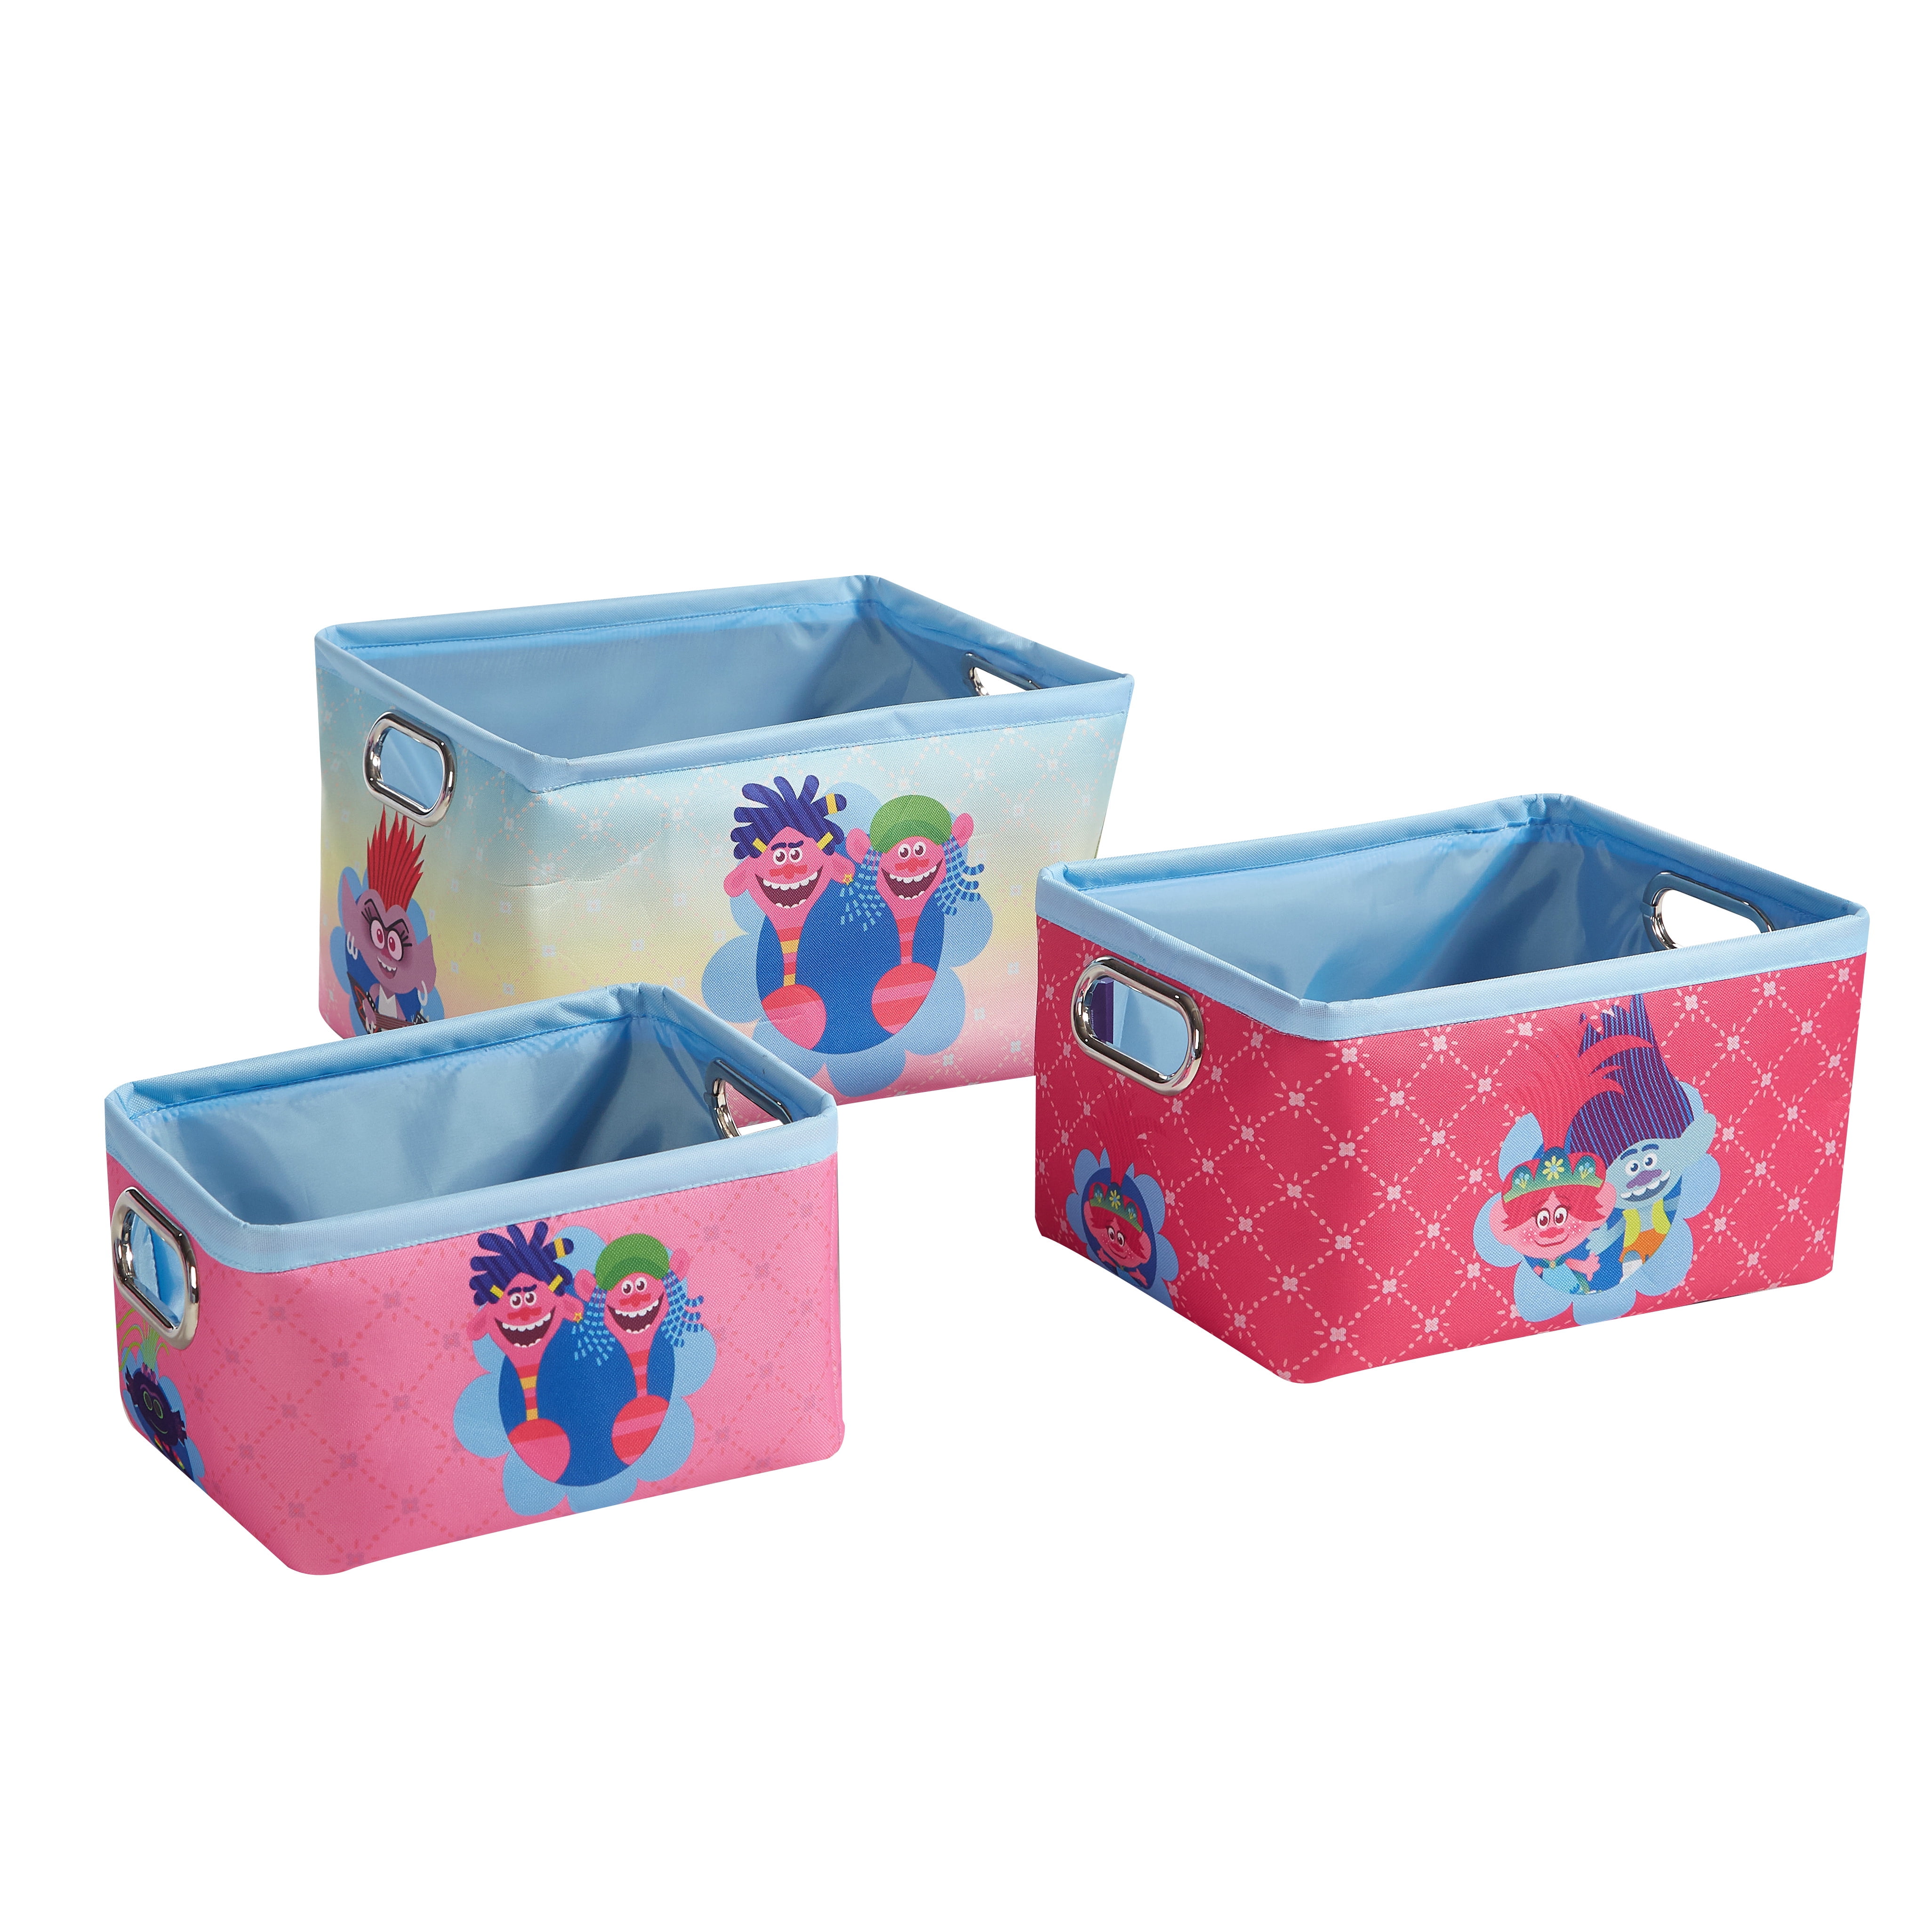 Disney Kids Cardboard Toy Storage Boxes Lids Kids Arts Crafts Box Collapsible 